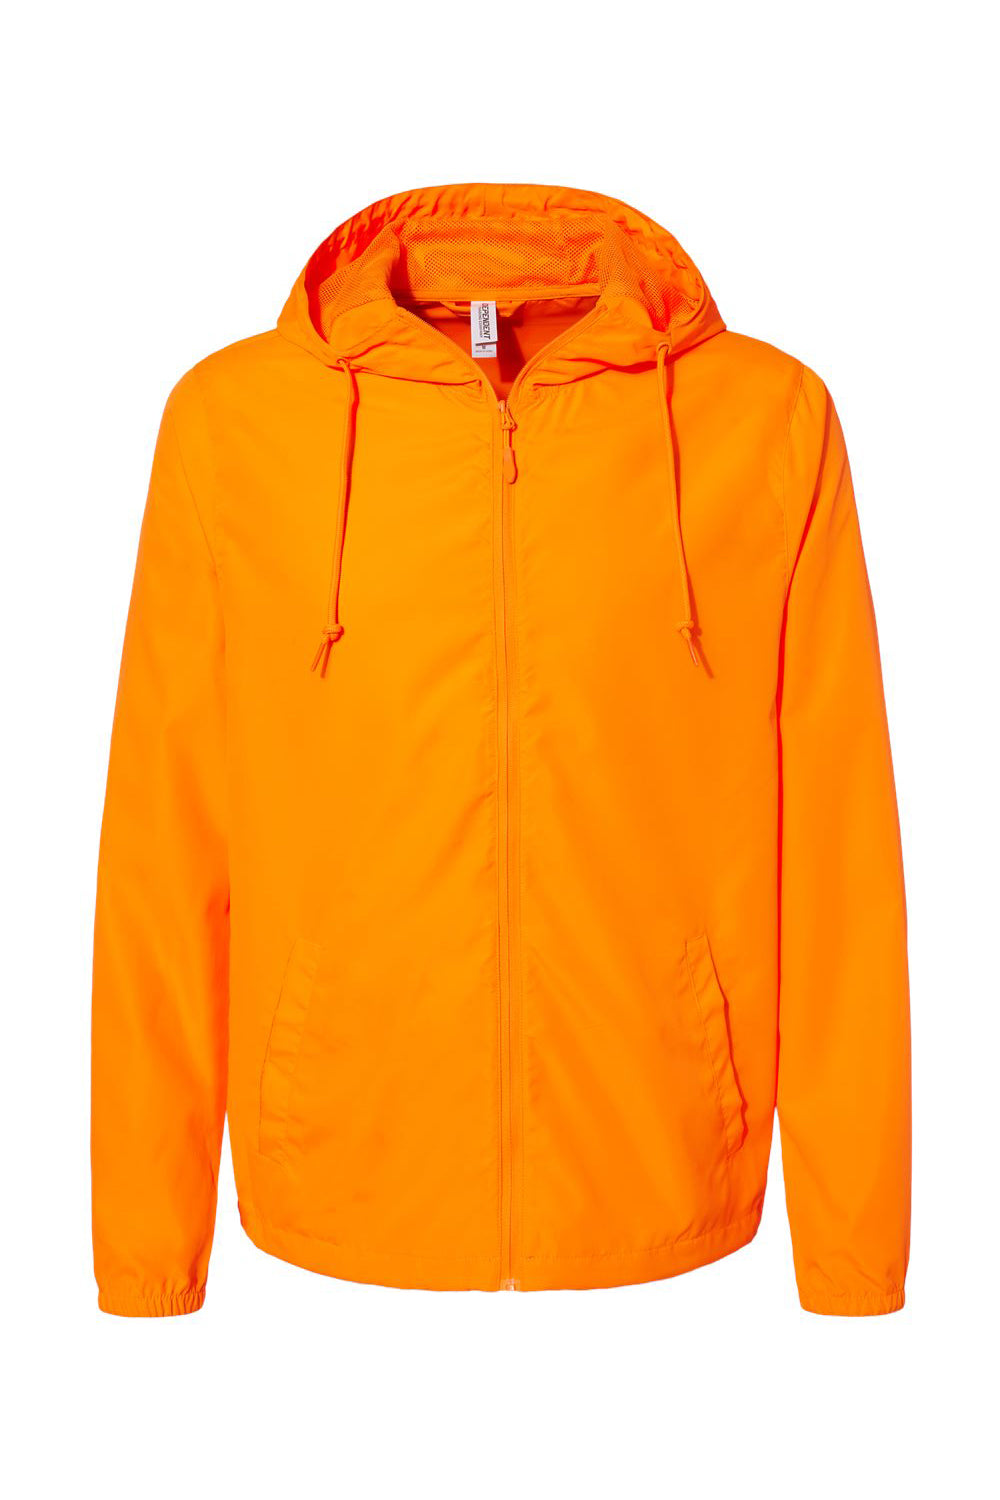 Independent Trading Co. EXP54LWZ Mens Full Zip Windbreaker Hooded Jacket Safety Orange Flat Front